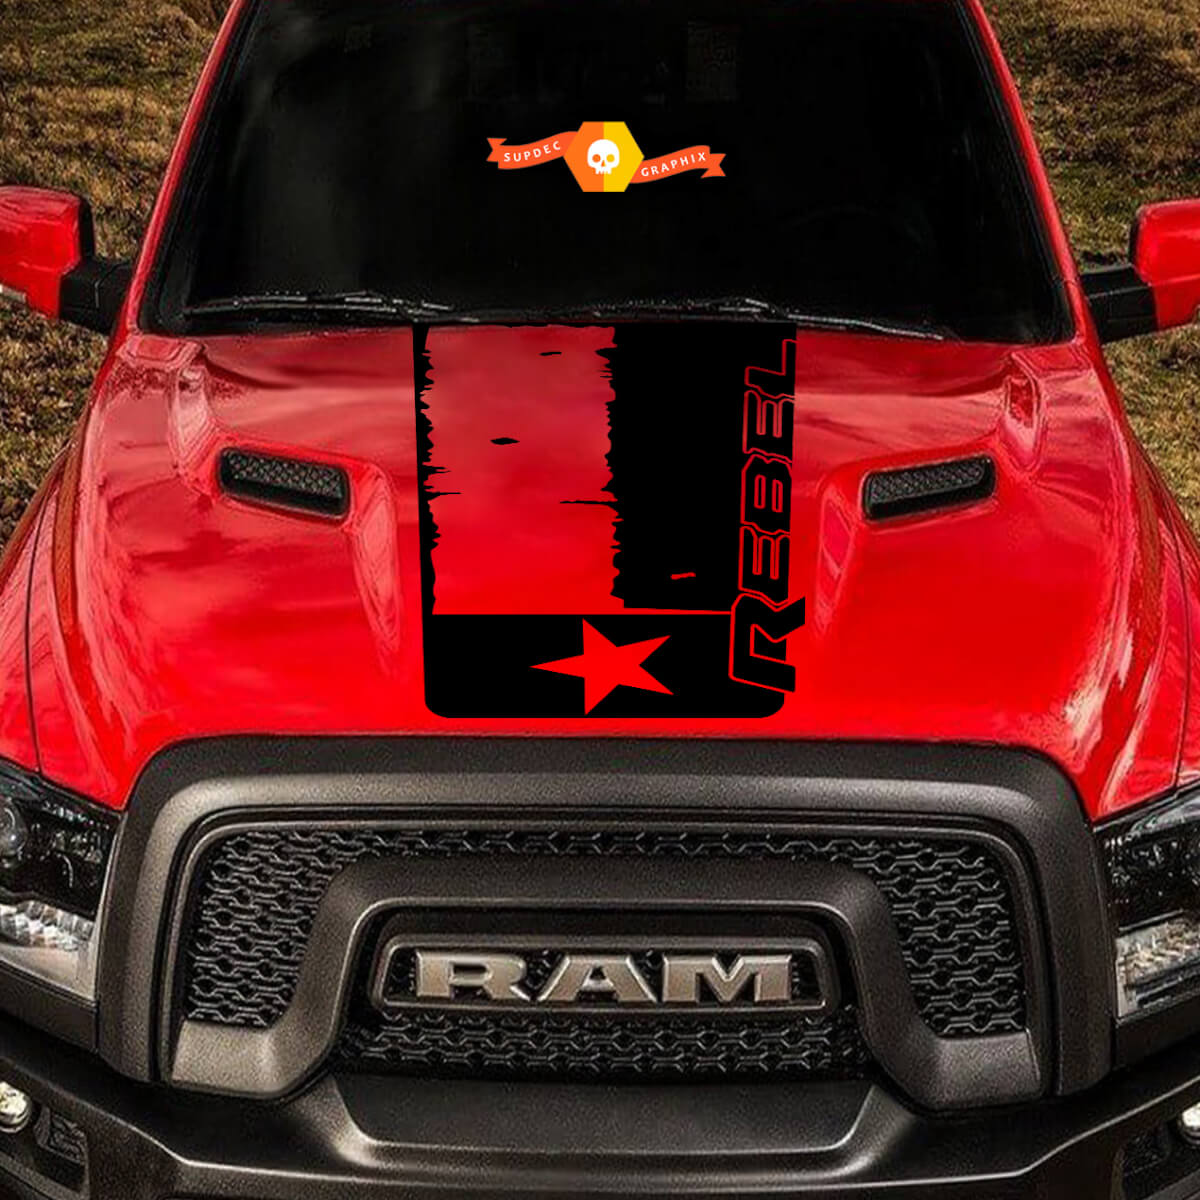 2015-17 Dodge Ram Rebel Distressed Texas Flag Hood Truck Vinyl Decal Graphic #1